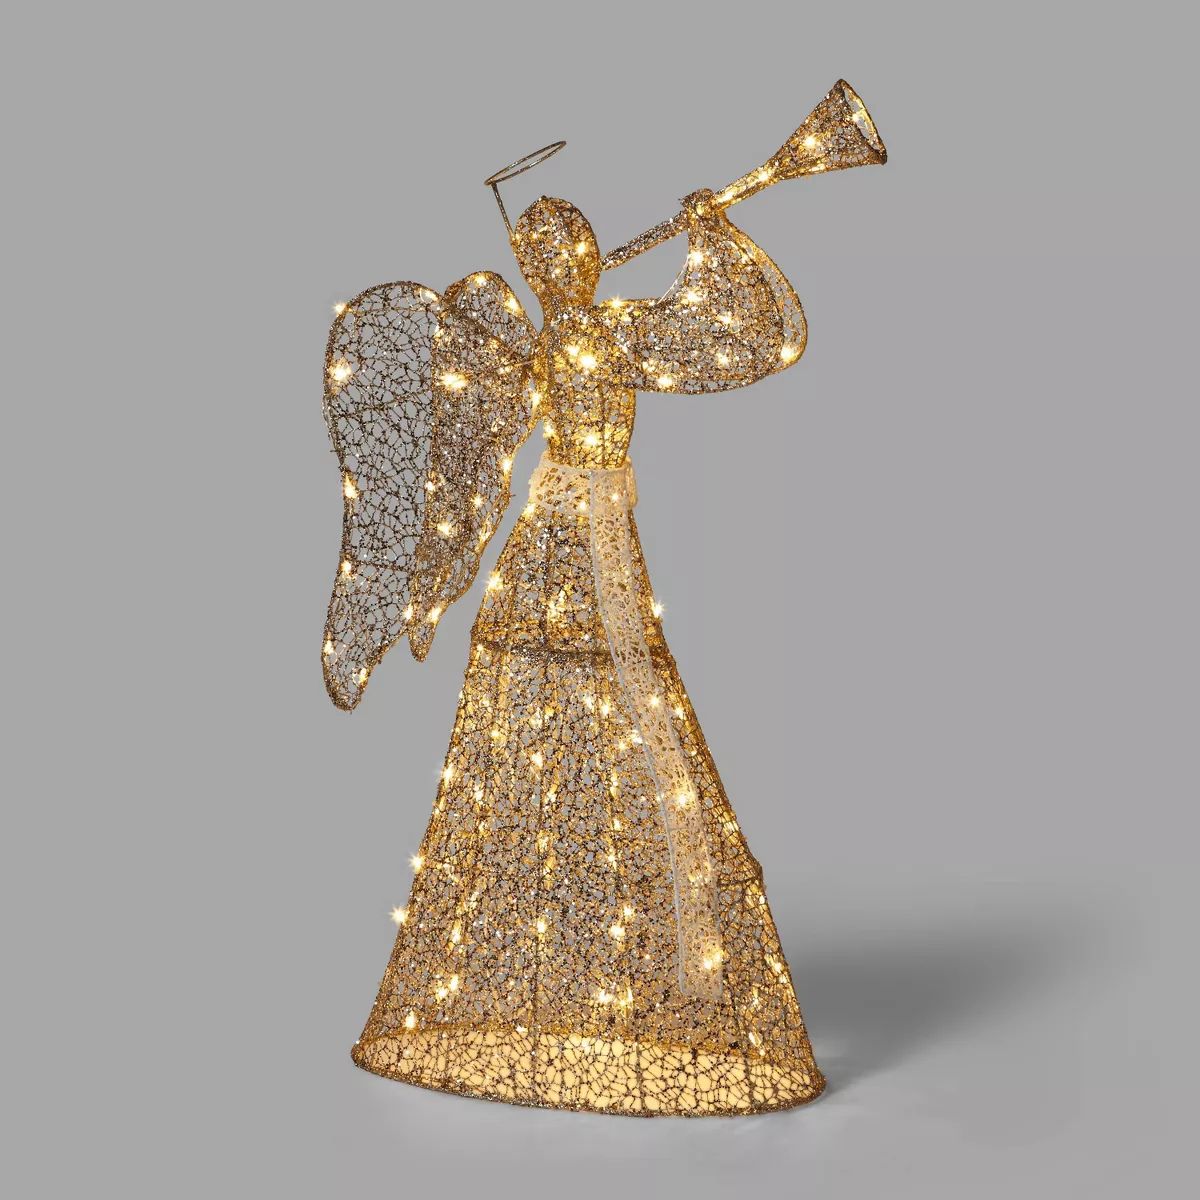 46" Gold Mesh Fabric Trumpeting Angel LED Christmas Novelty Sculpture Light - Wondershop™ | Target